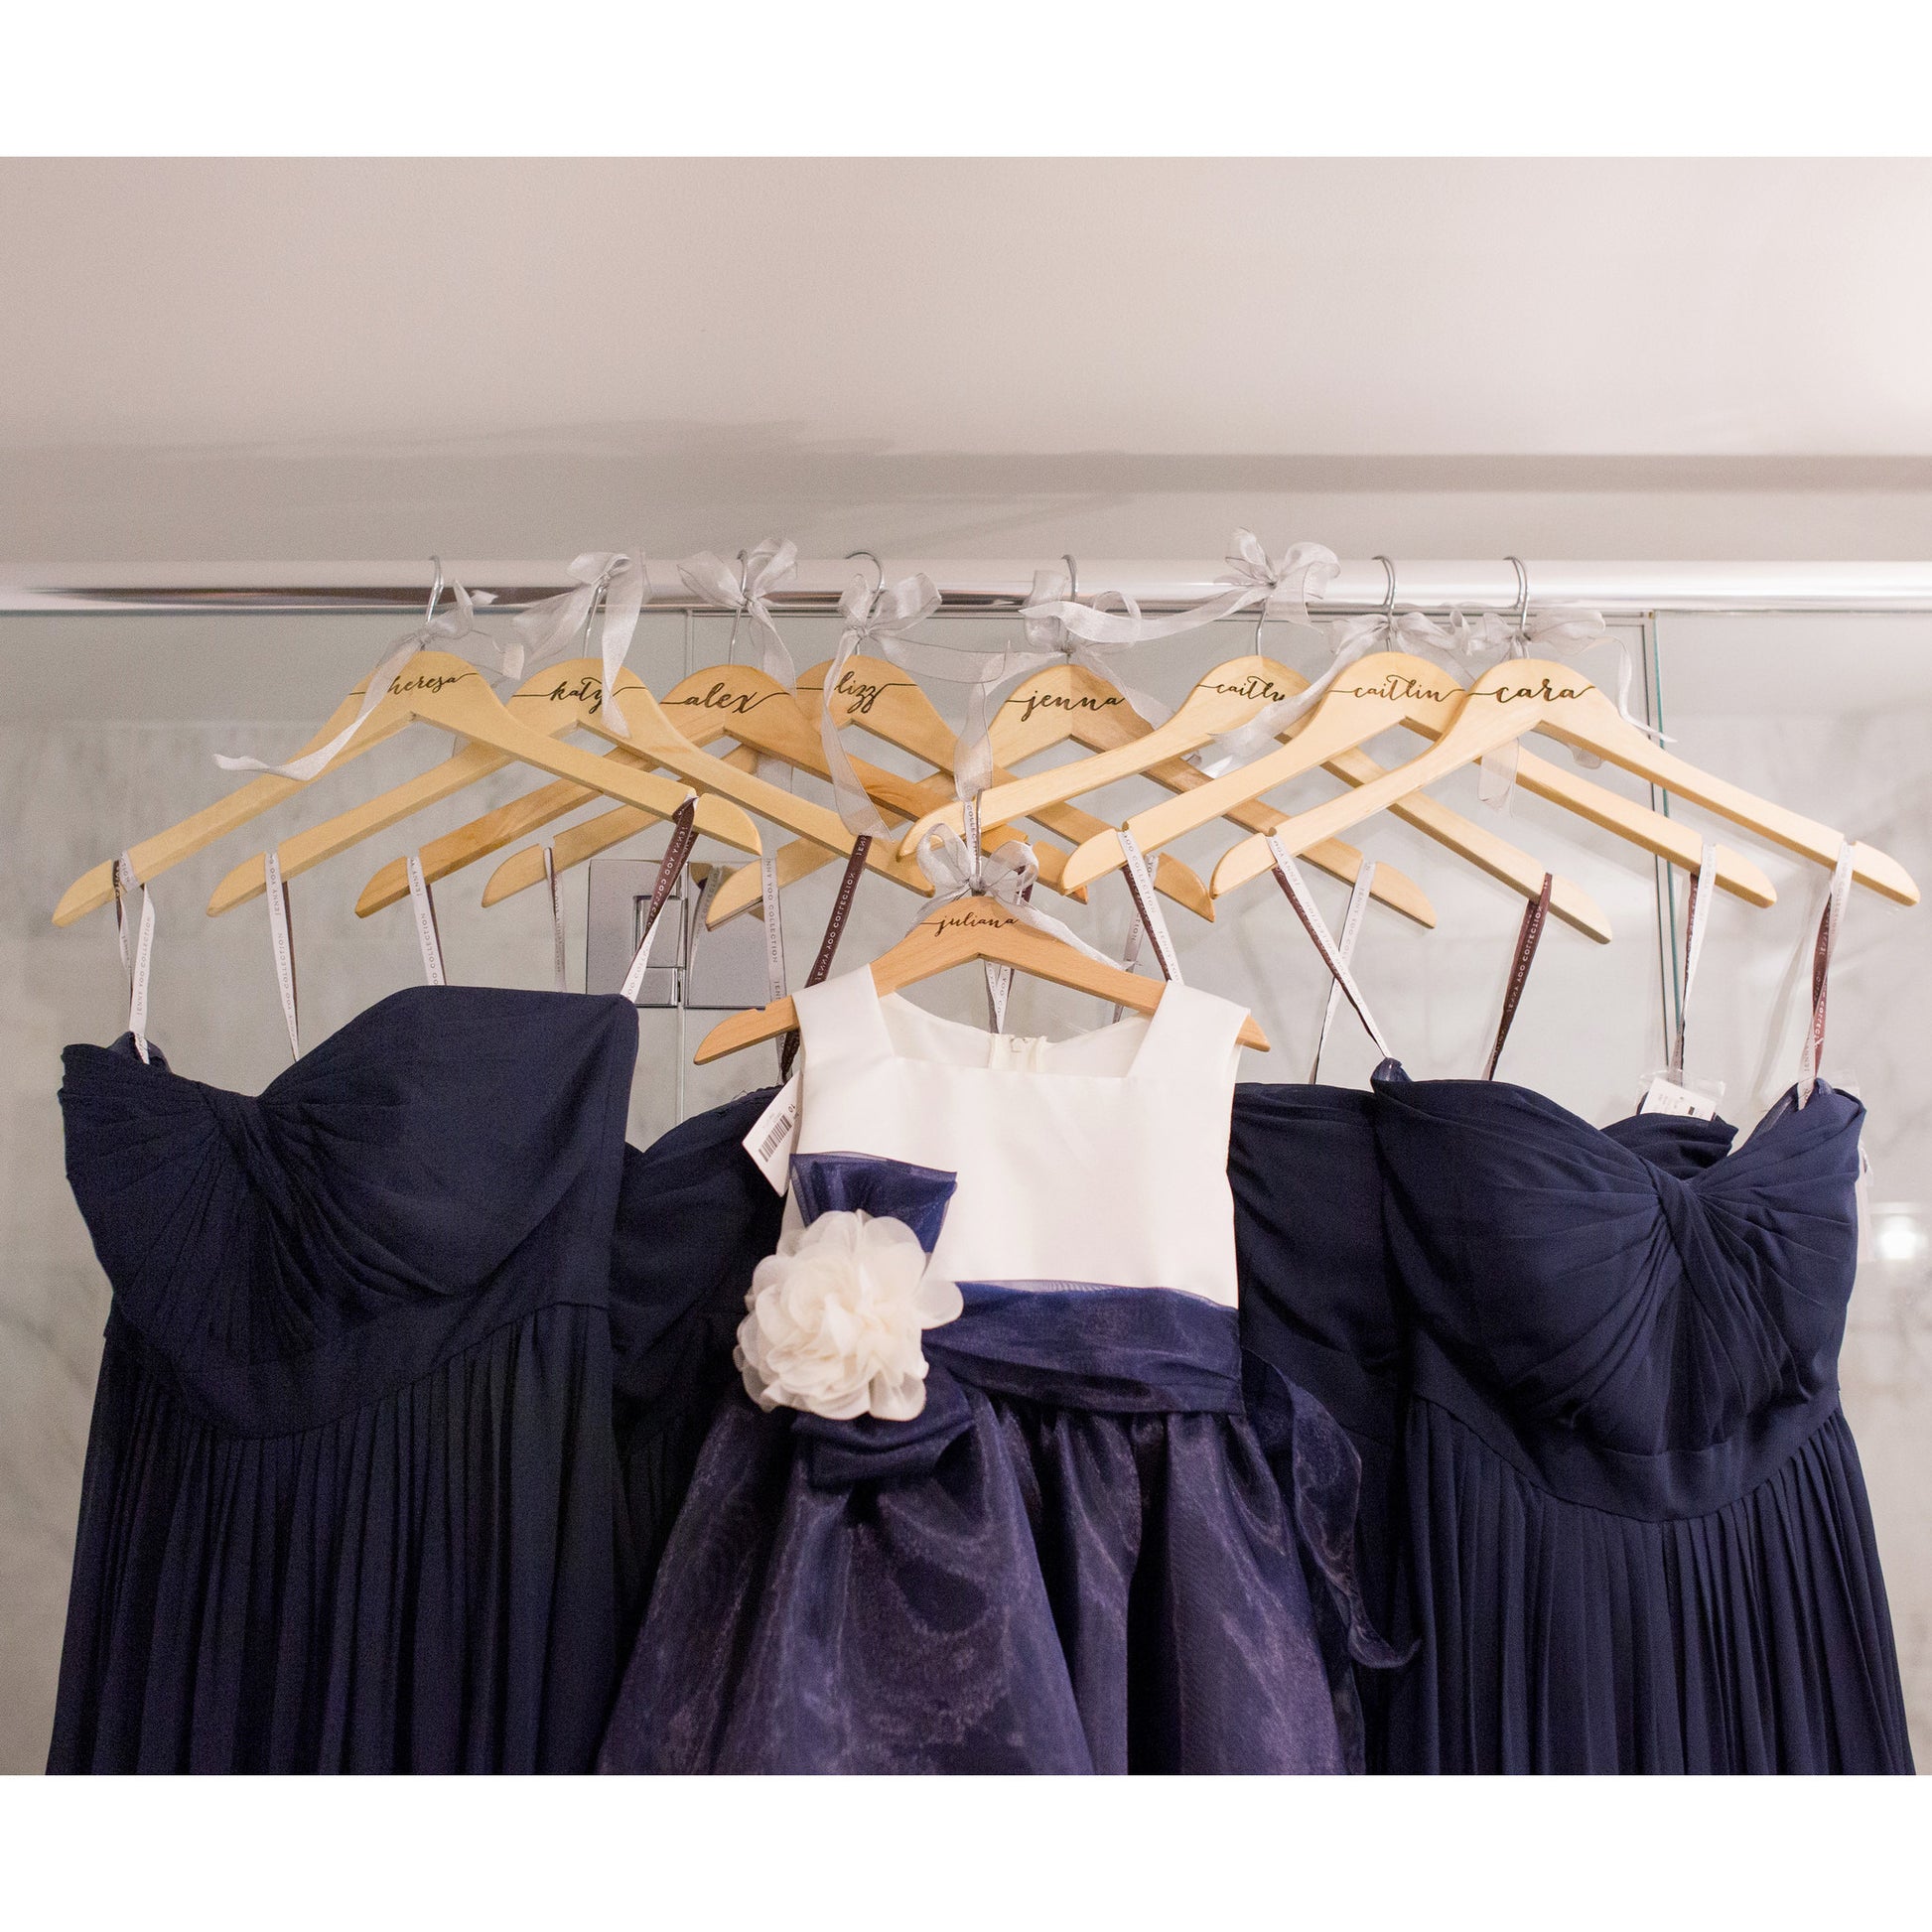 Hanger design bespoke - Personnalized hangers